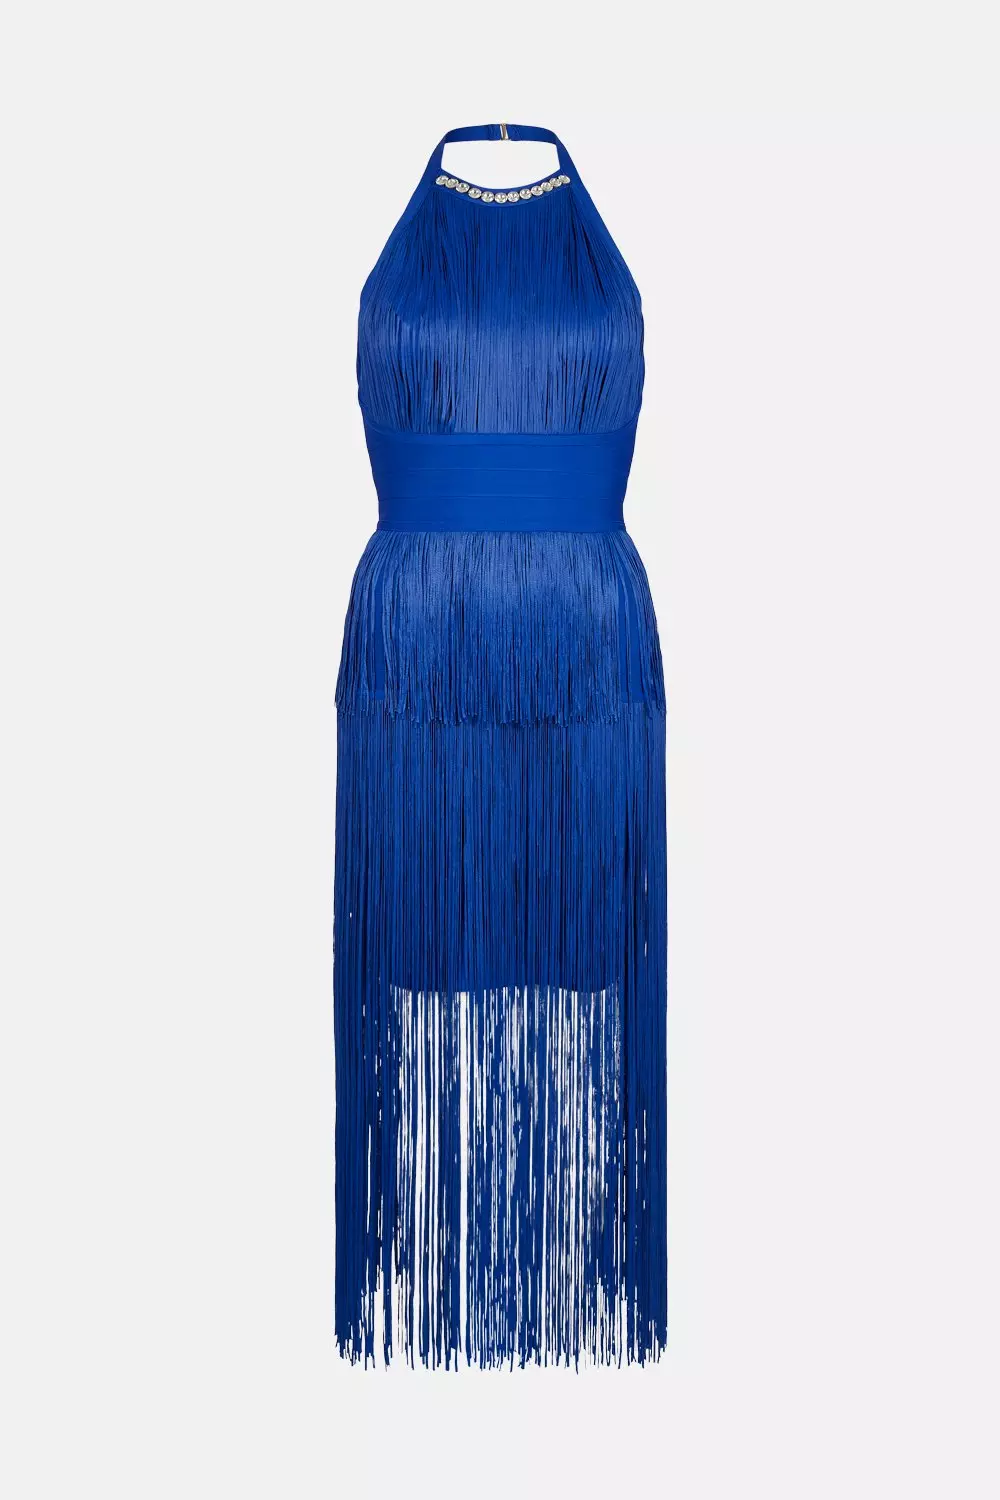 Bandage Knit Fringed Dress In Recycled Yarn